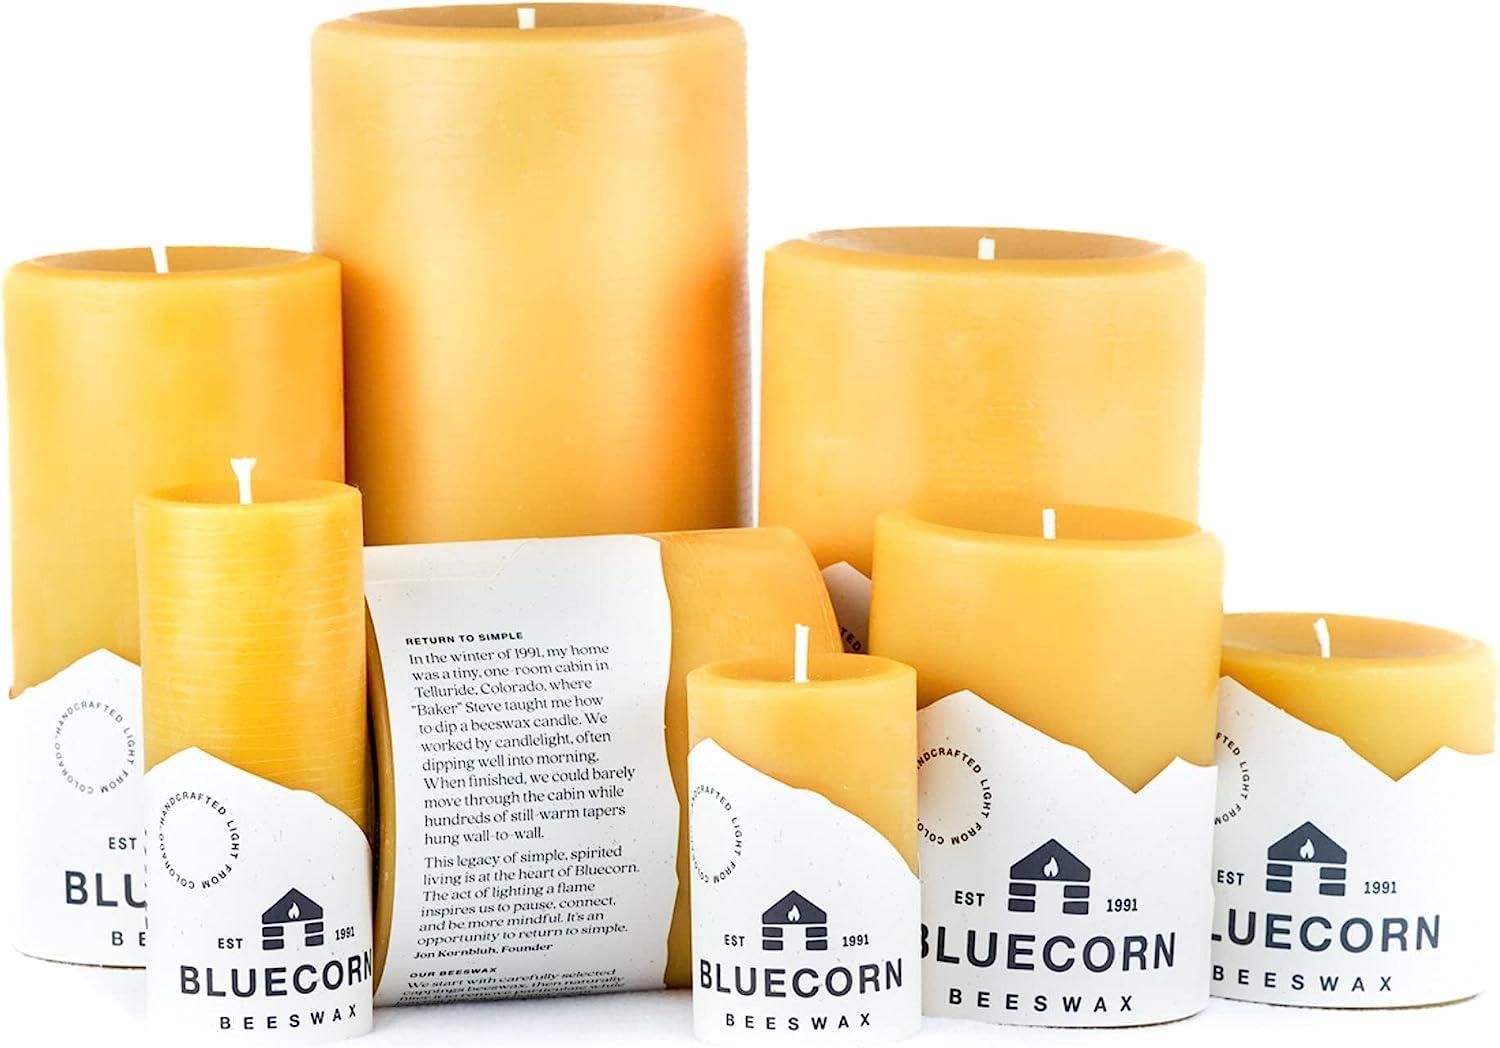 Bluecorn Bees Wax Pillar Candle 3 x 3 